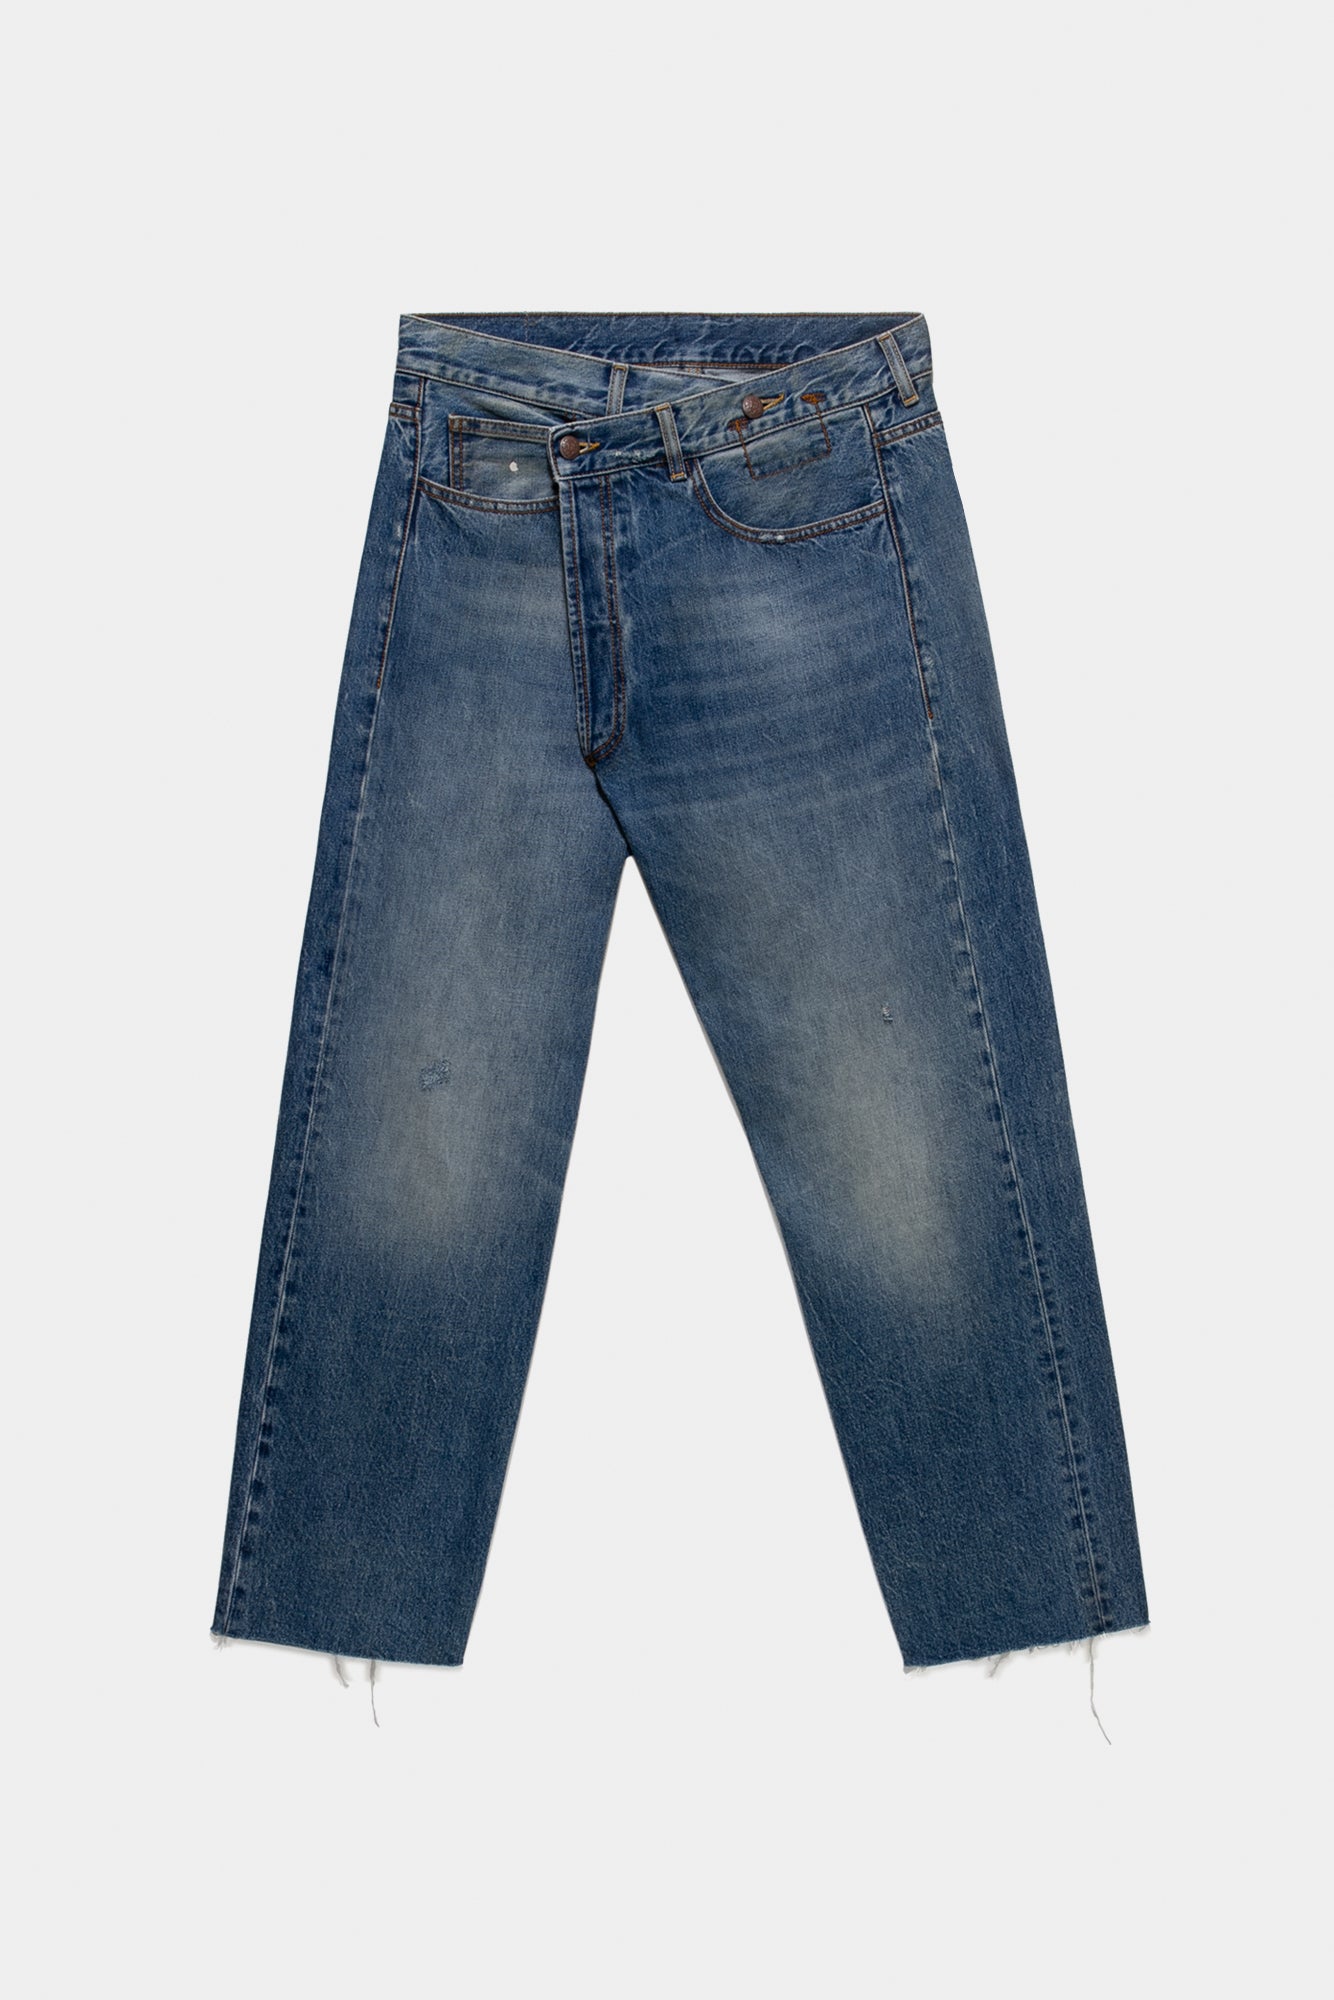 Straight Joe Jeans | Jeans | Joe Browns Official Site